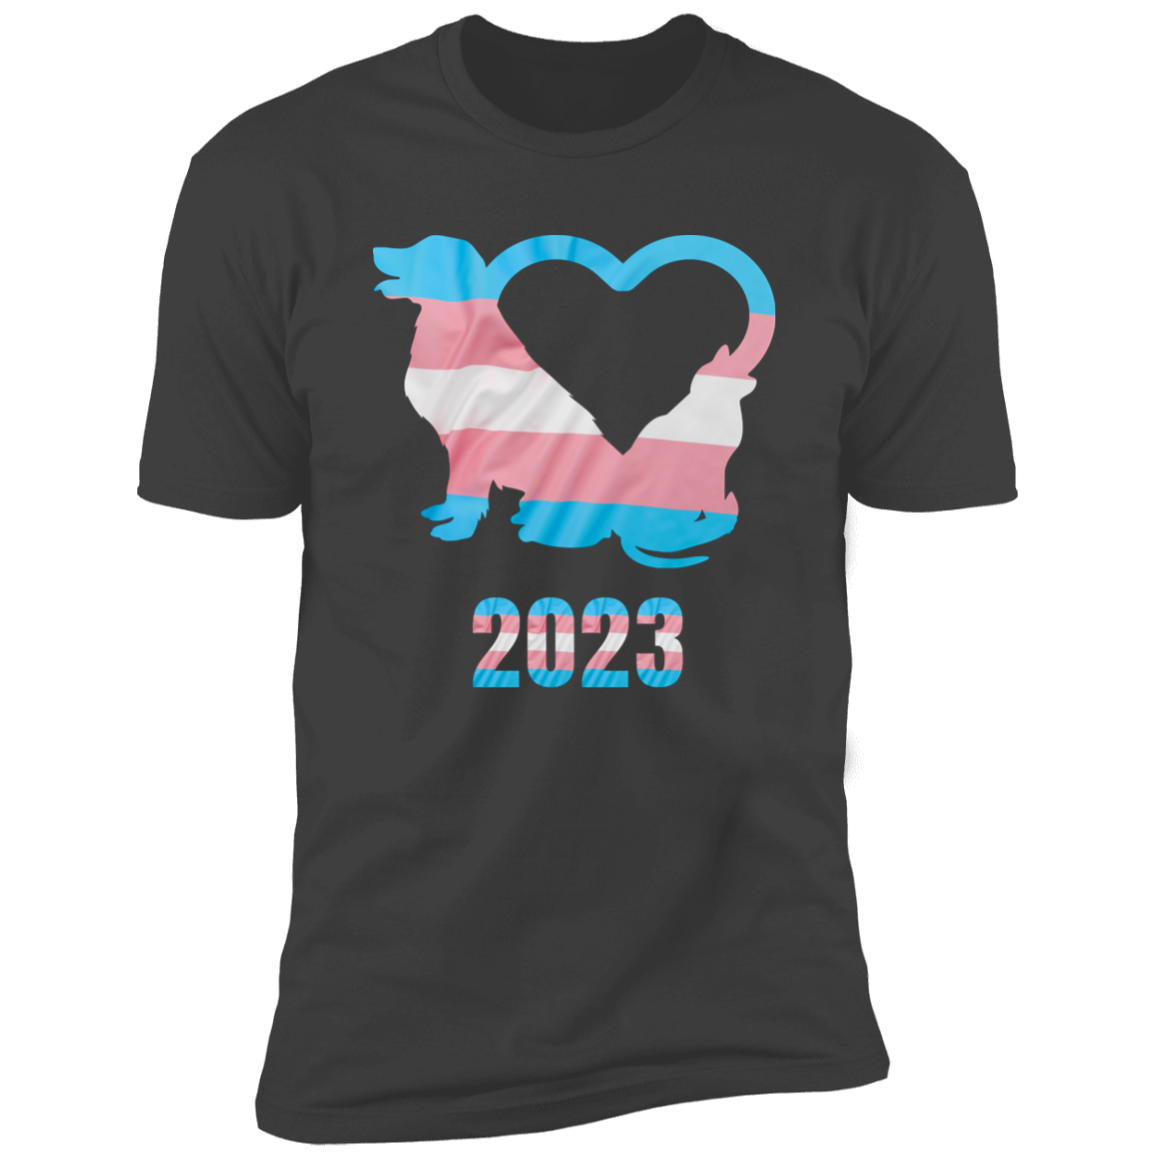 Trans Pride Dog & Cat Heart Pride T-shirt, Trans Pride Dog & Cat Shirt for humans, in heavy metal gray